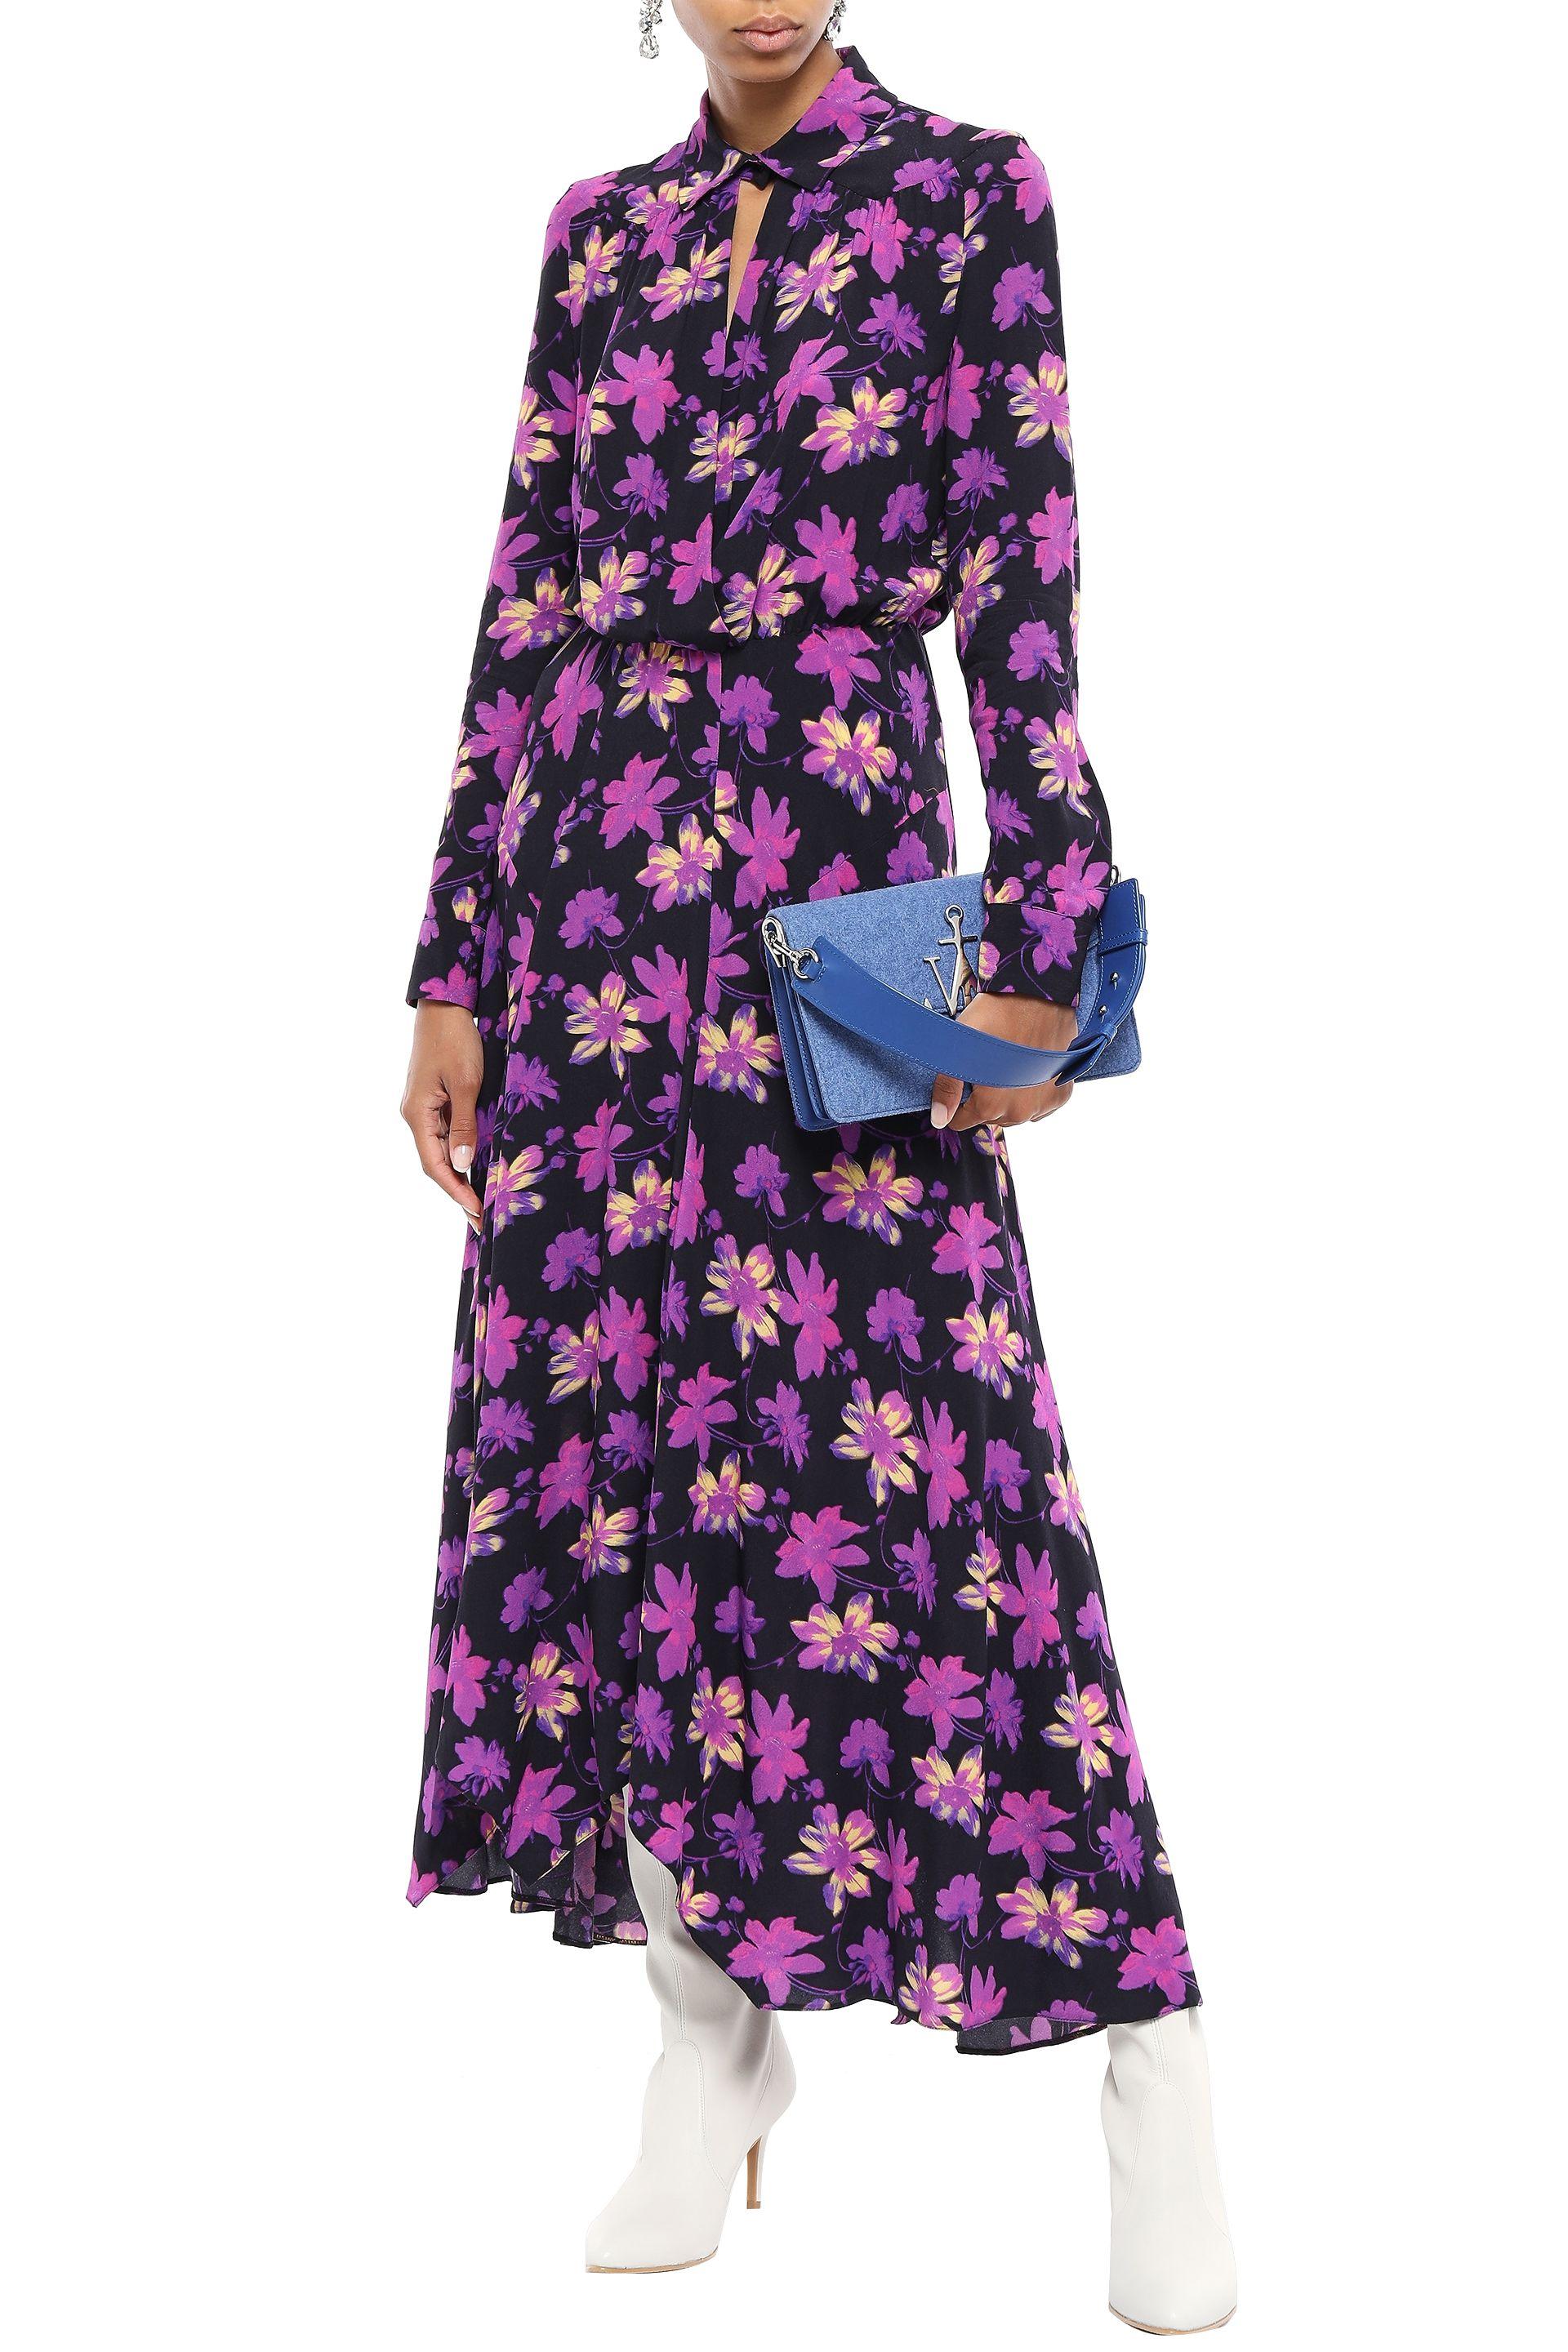 maje purple floral dress